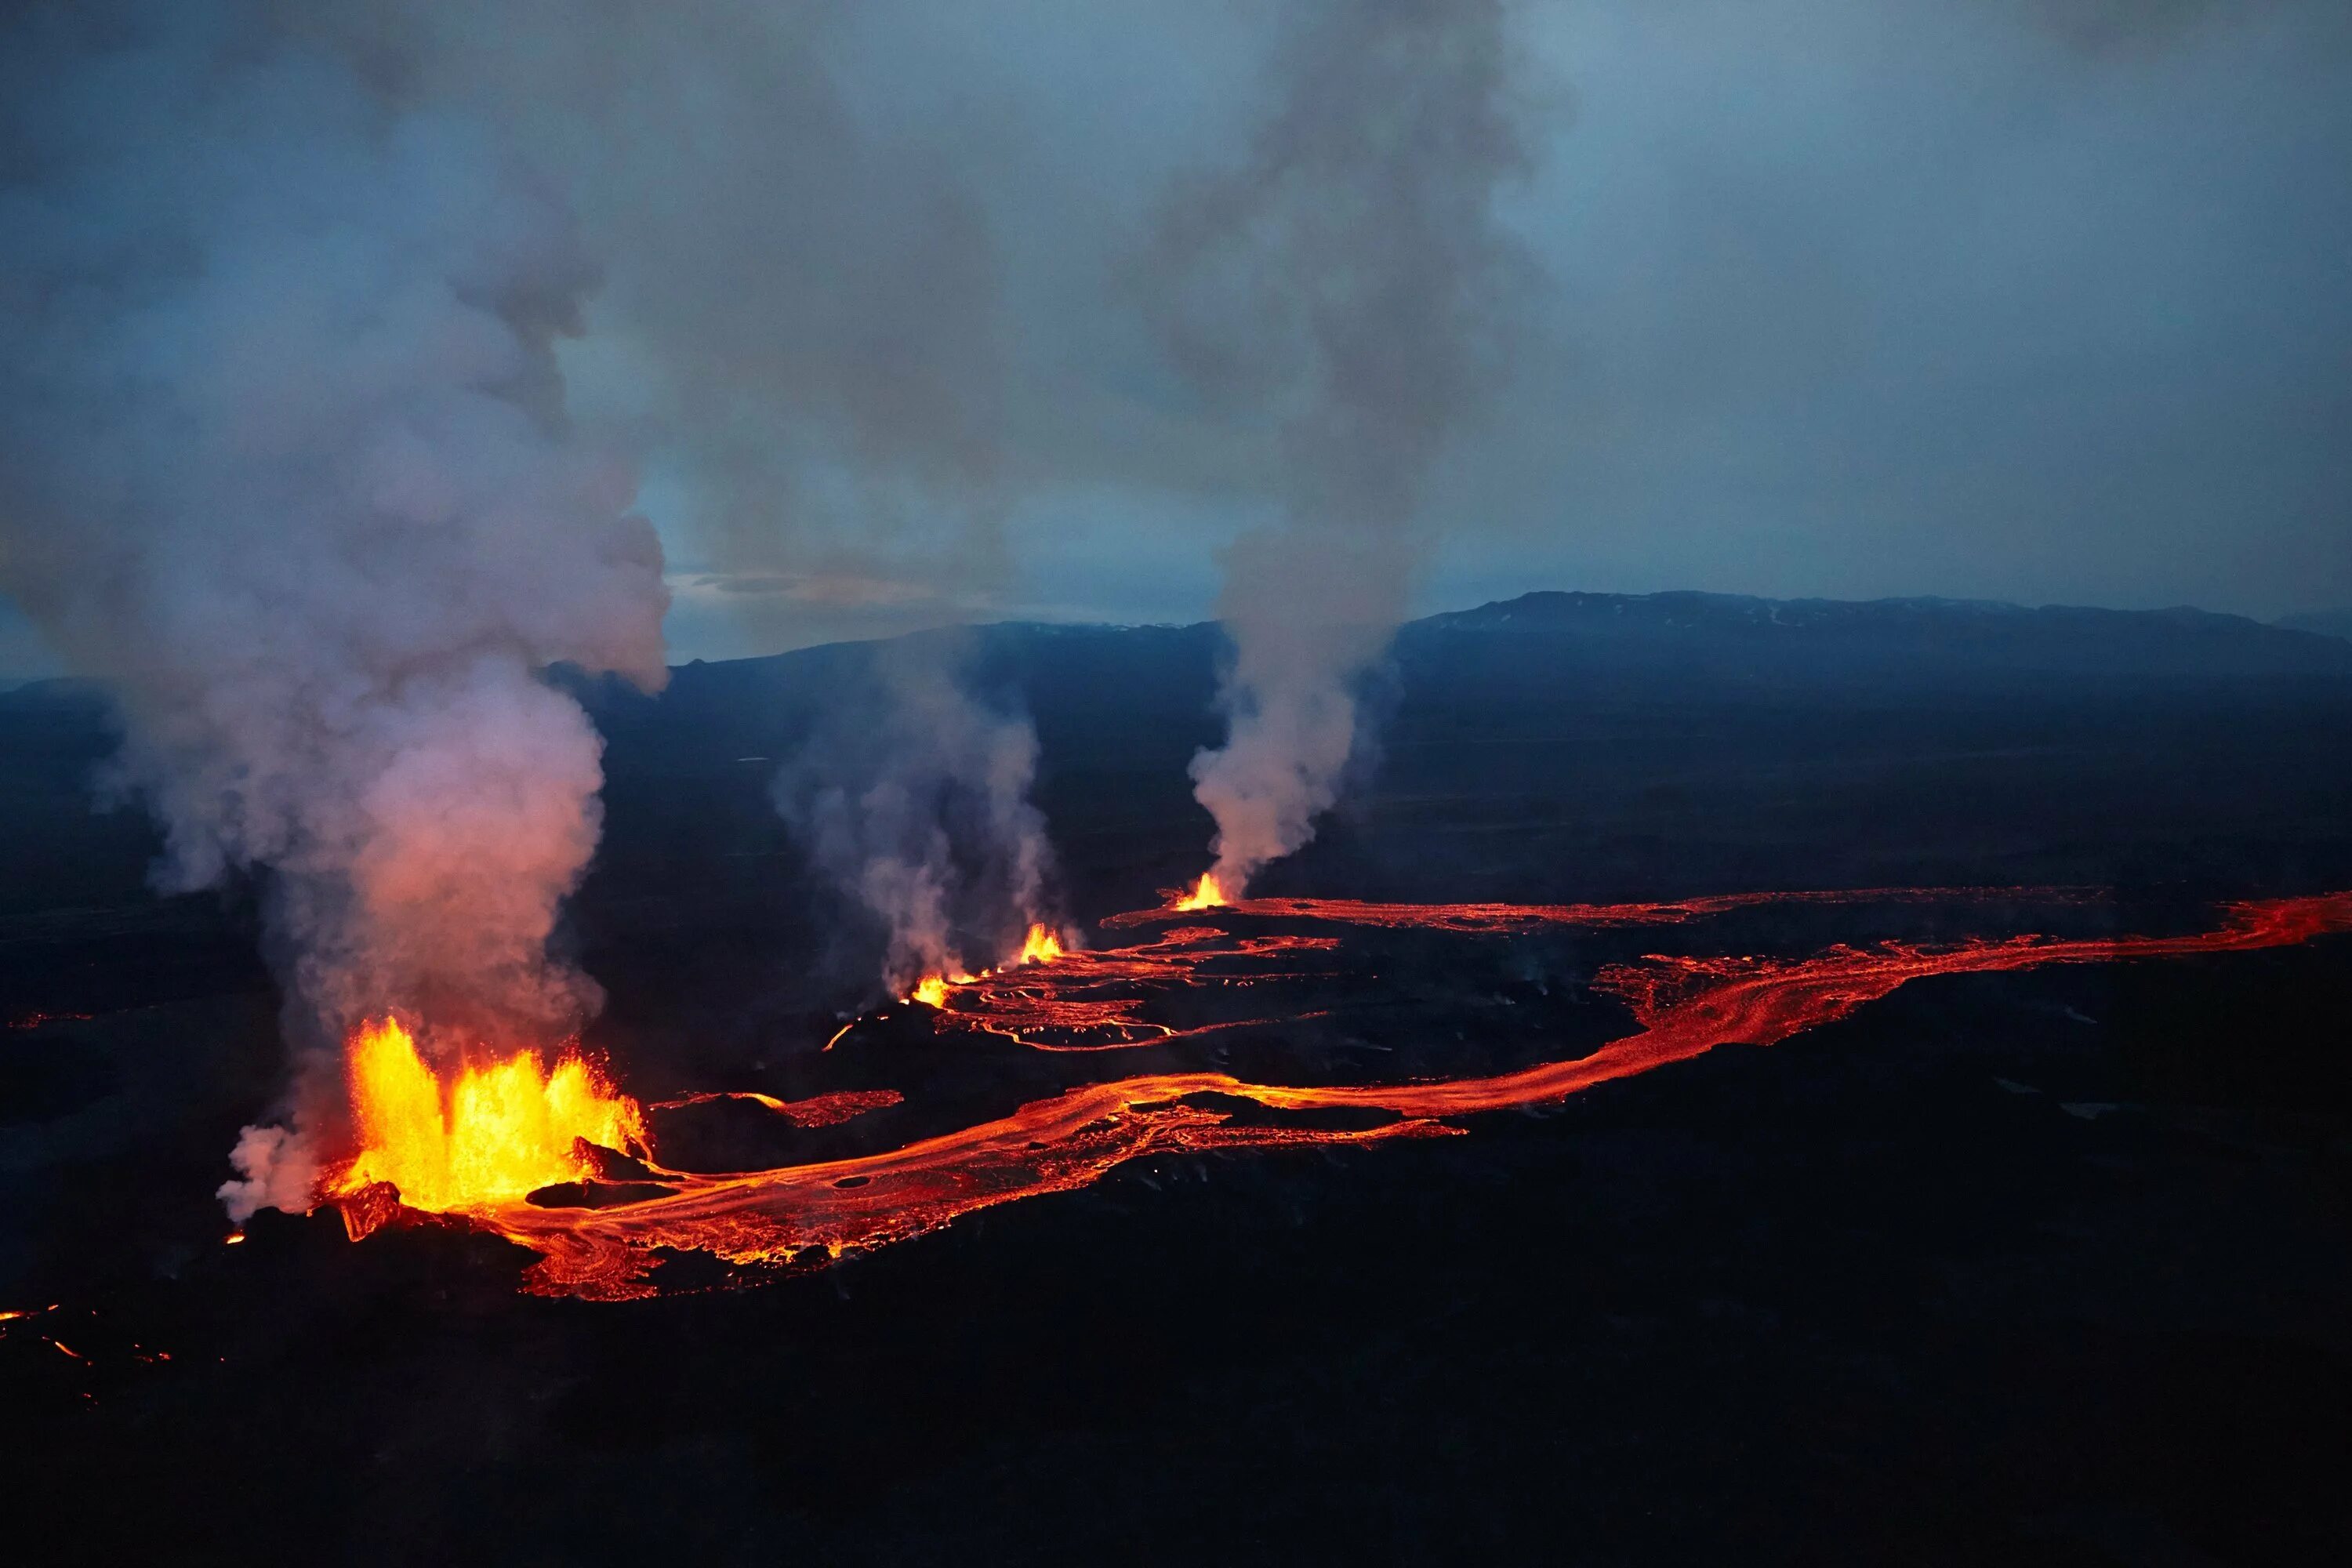 Землетрясение извержение. Извержение вулкана фаградальсфьядль. Извержение фаградалсфьяль вулкана. Извержение вулкана Холухрейн, Исландия. Вулканические землетрясения.